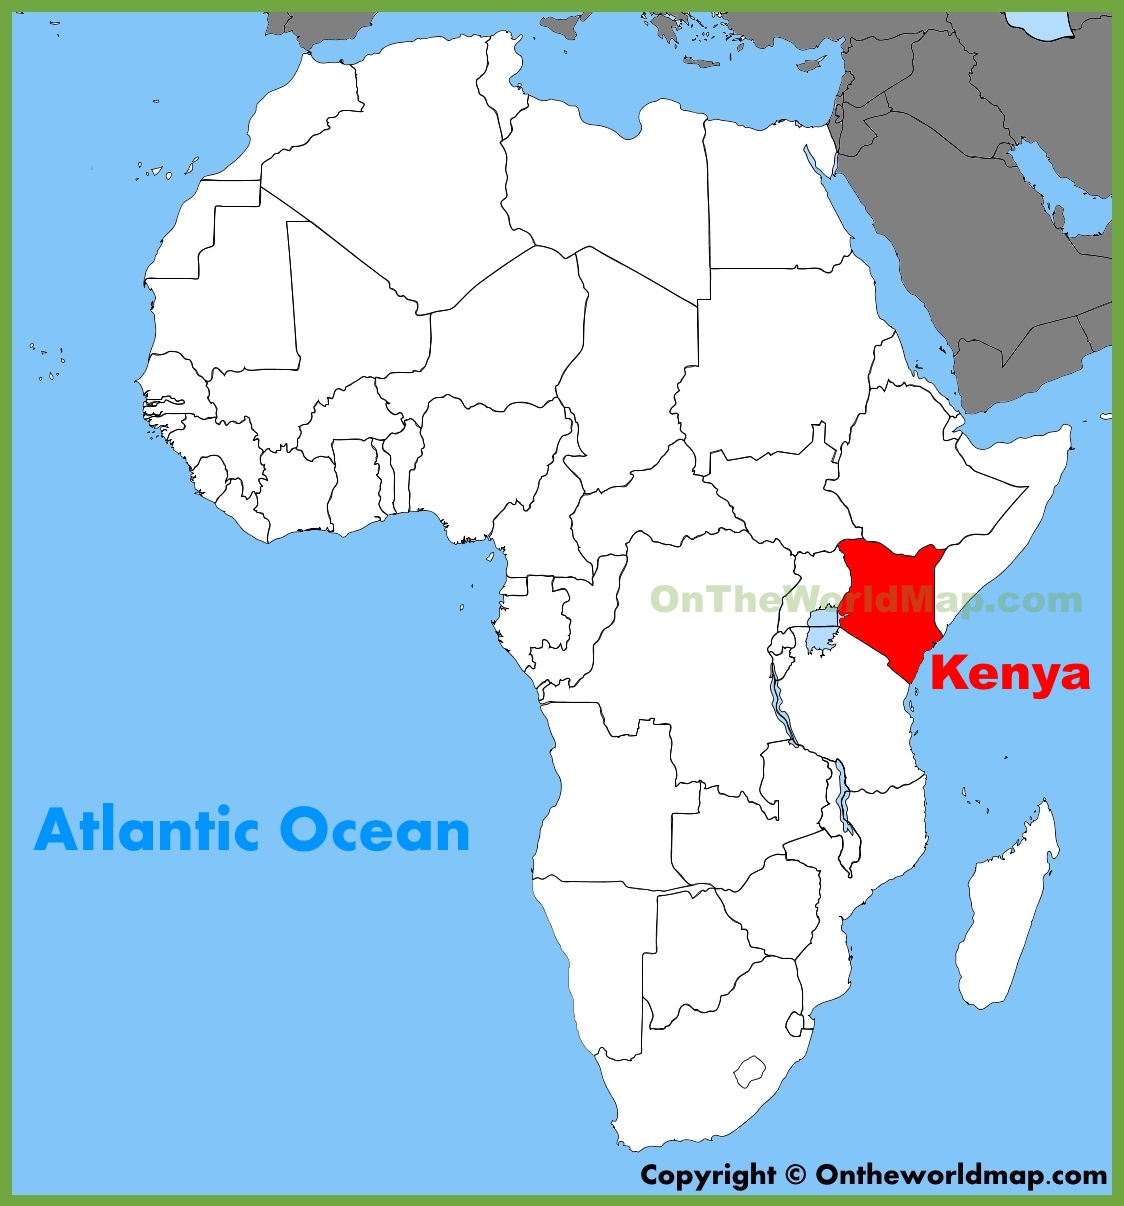 kenya-location-on-the-africa-map.jpg